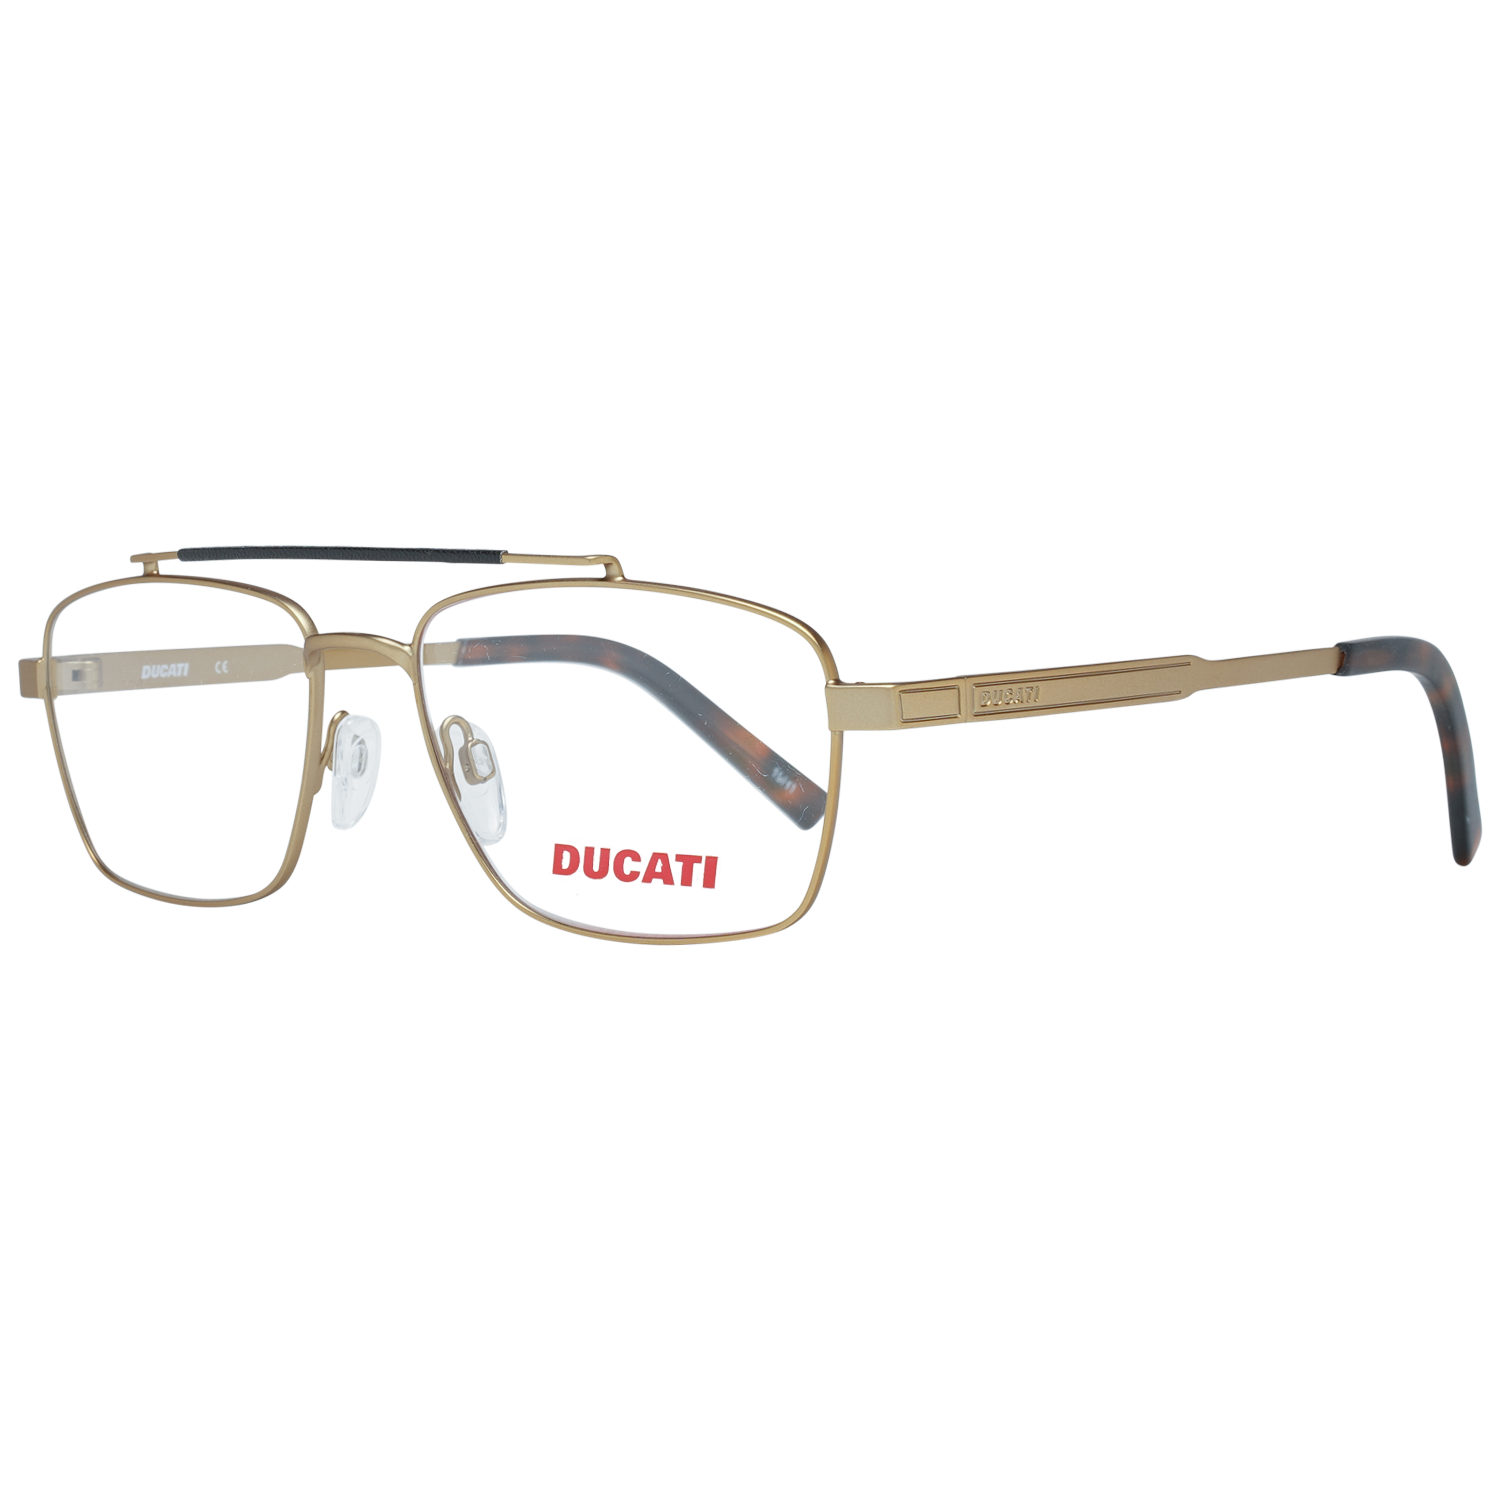 Ducati Frames Ducati Optical Frame DA3019 403 54 Eyeglasses Eyewear UK USA Australia 